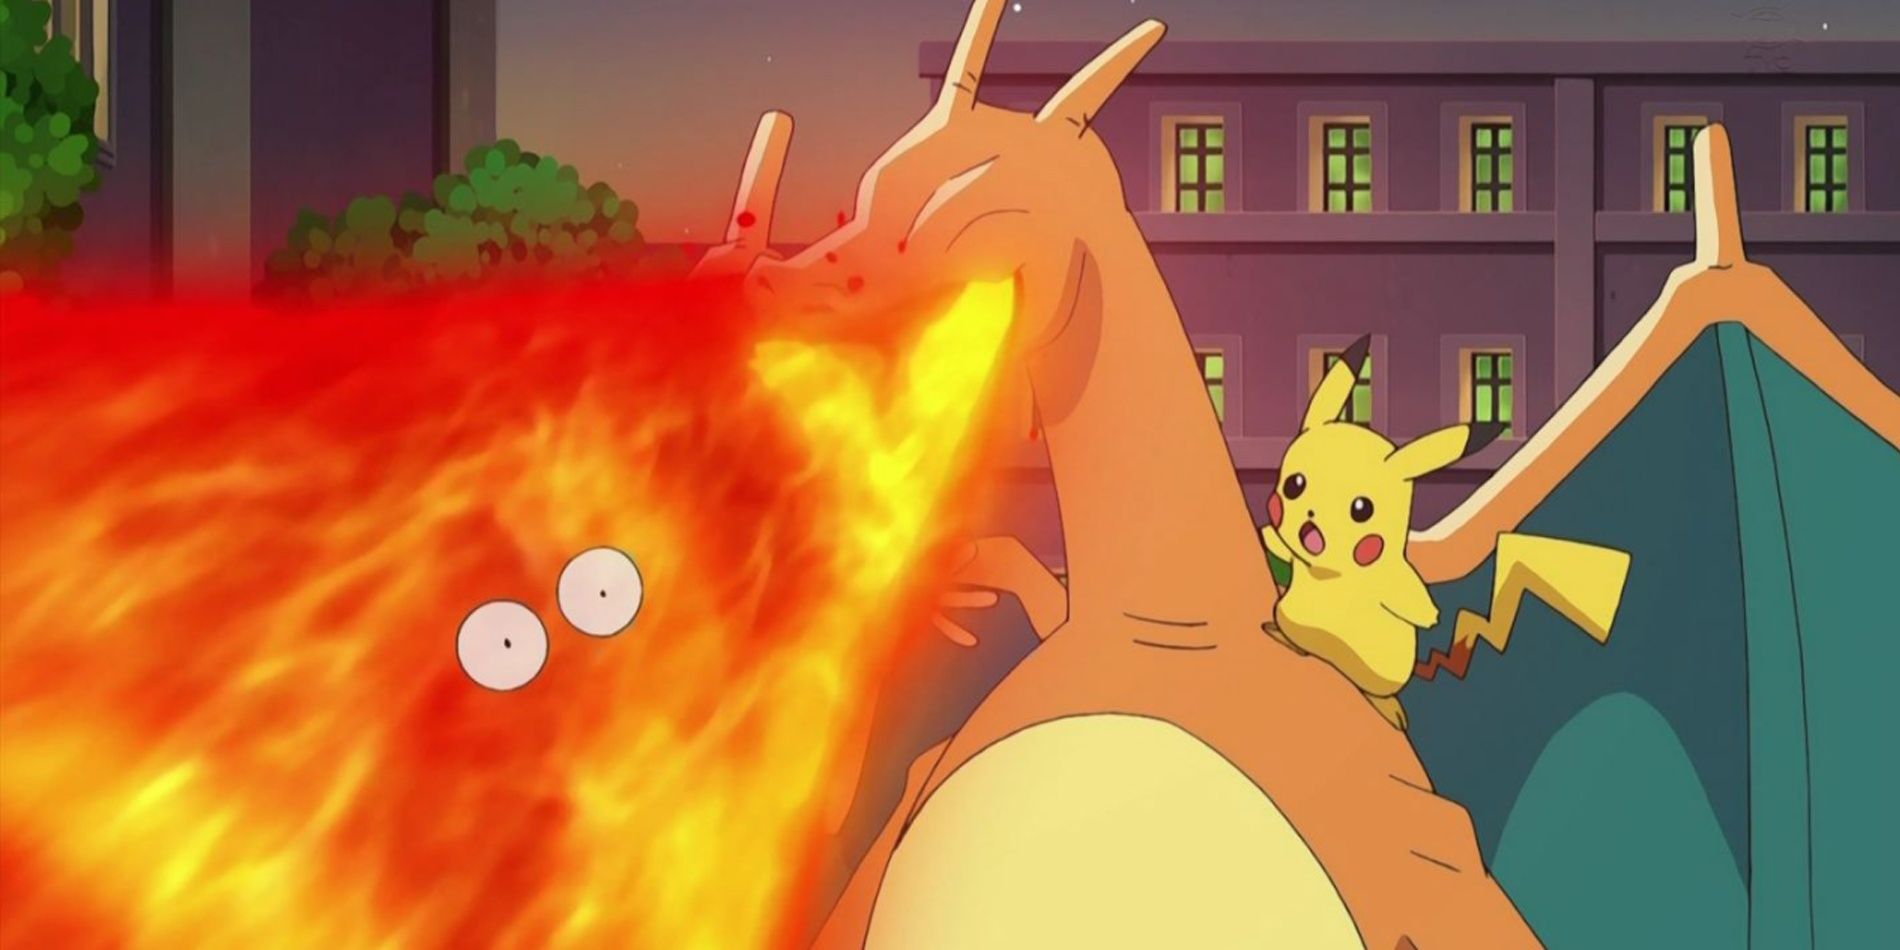 Charizard burns Ash in Pokemon